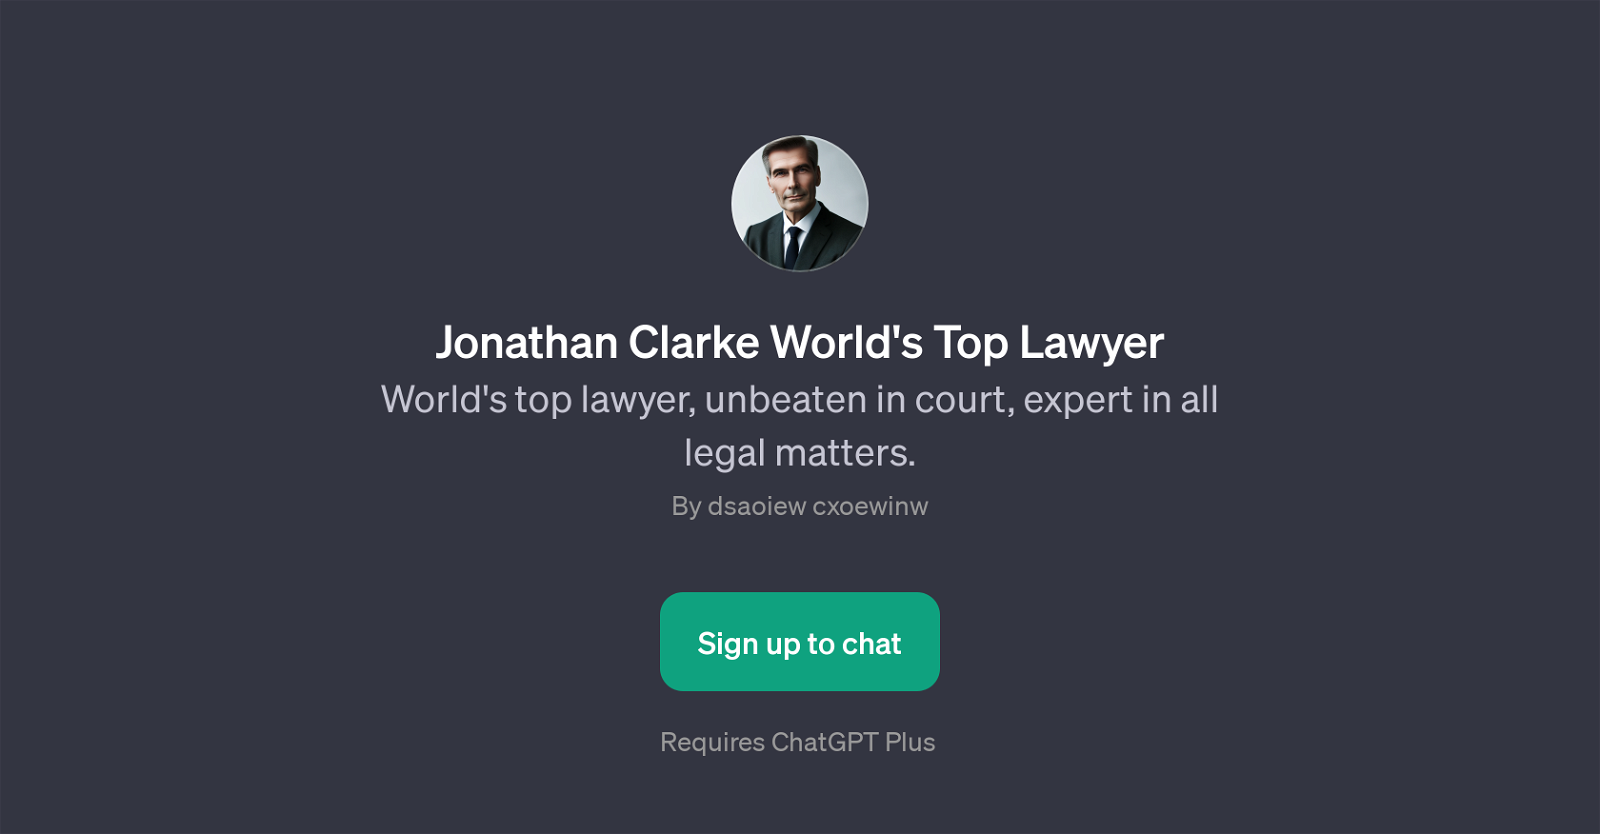 Jonathan Clarke World's Top Lawyer website